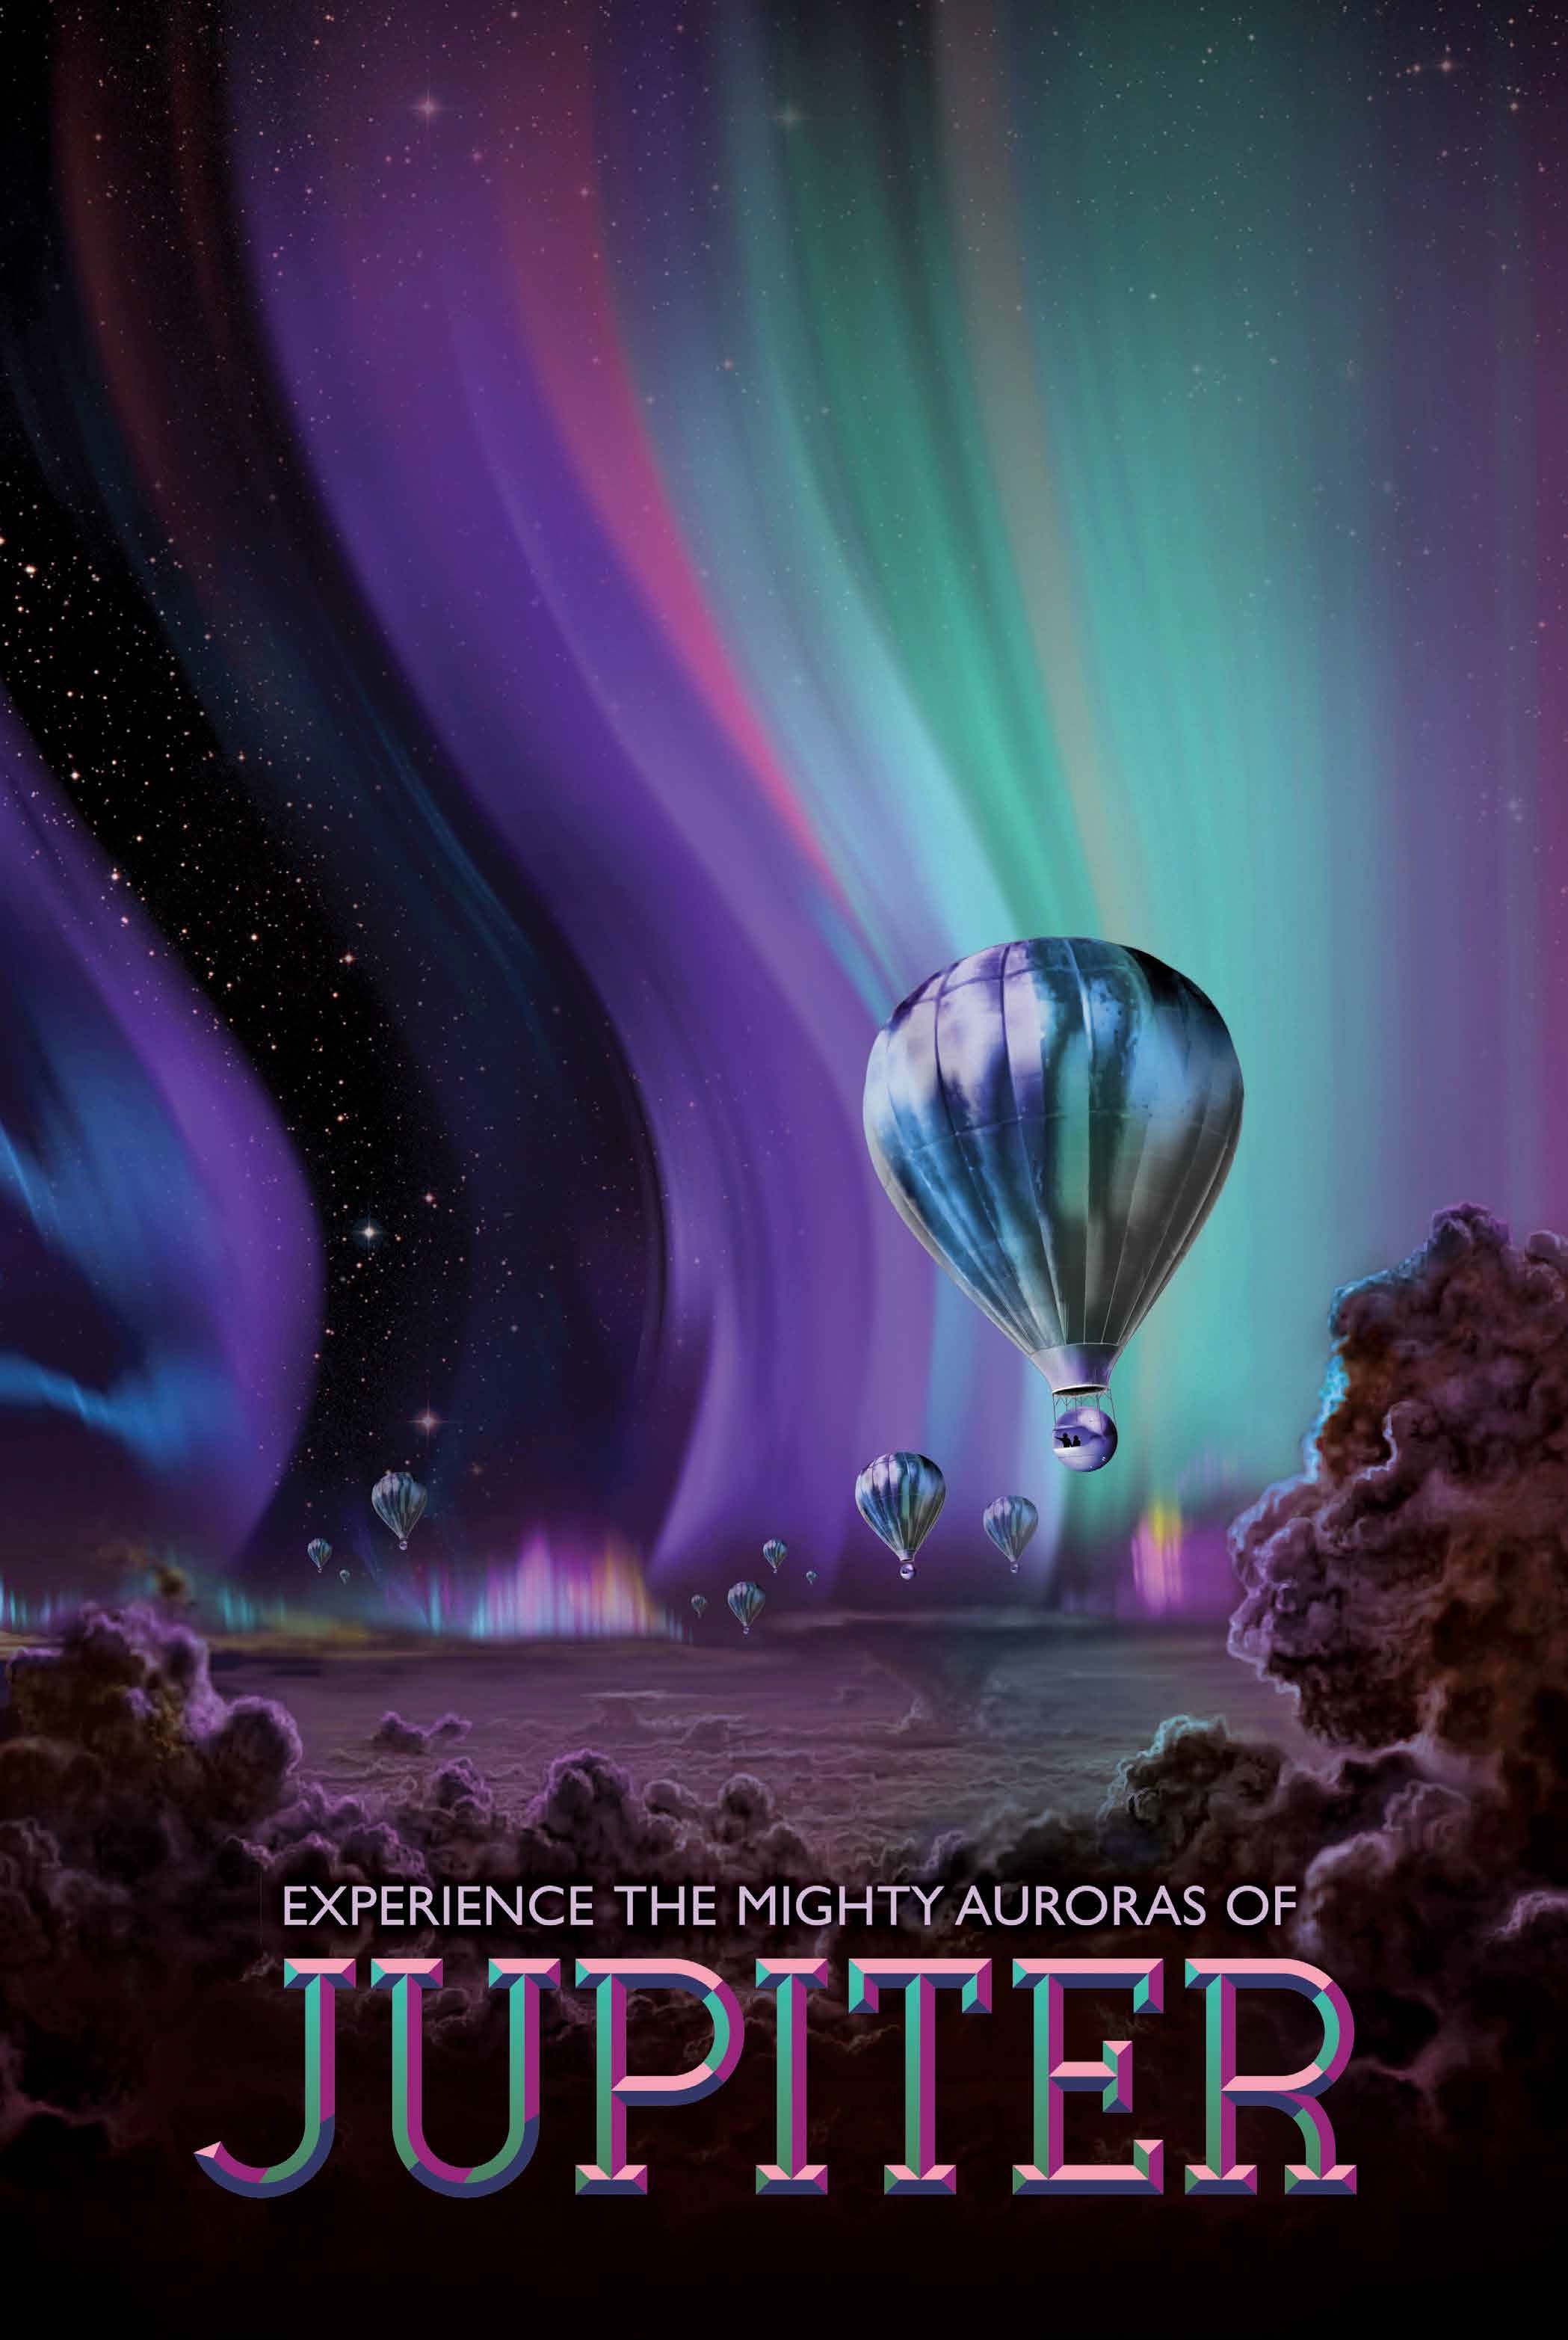 General 2098x3130 space planet NASA science fiction JPL (Jet Propulsion Laboratory) Jupiter hot air balloons aurorae purple